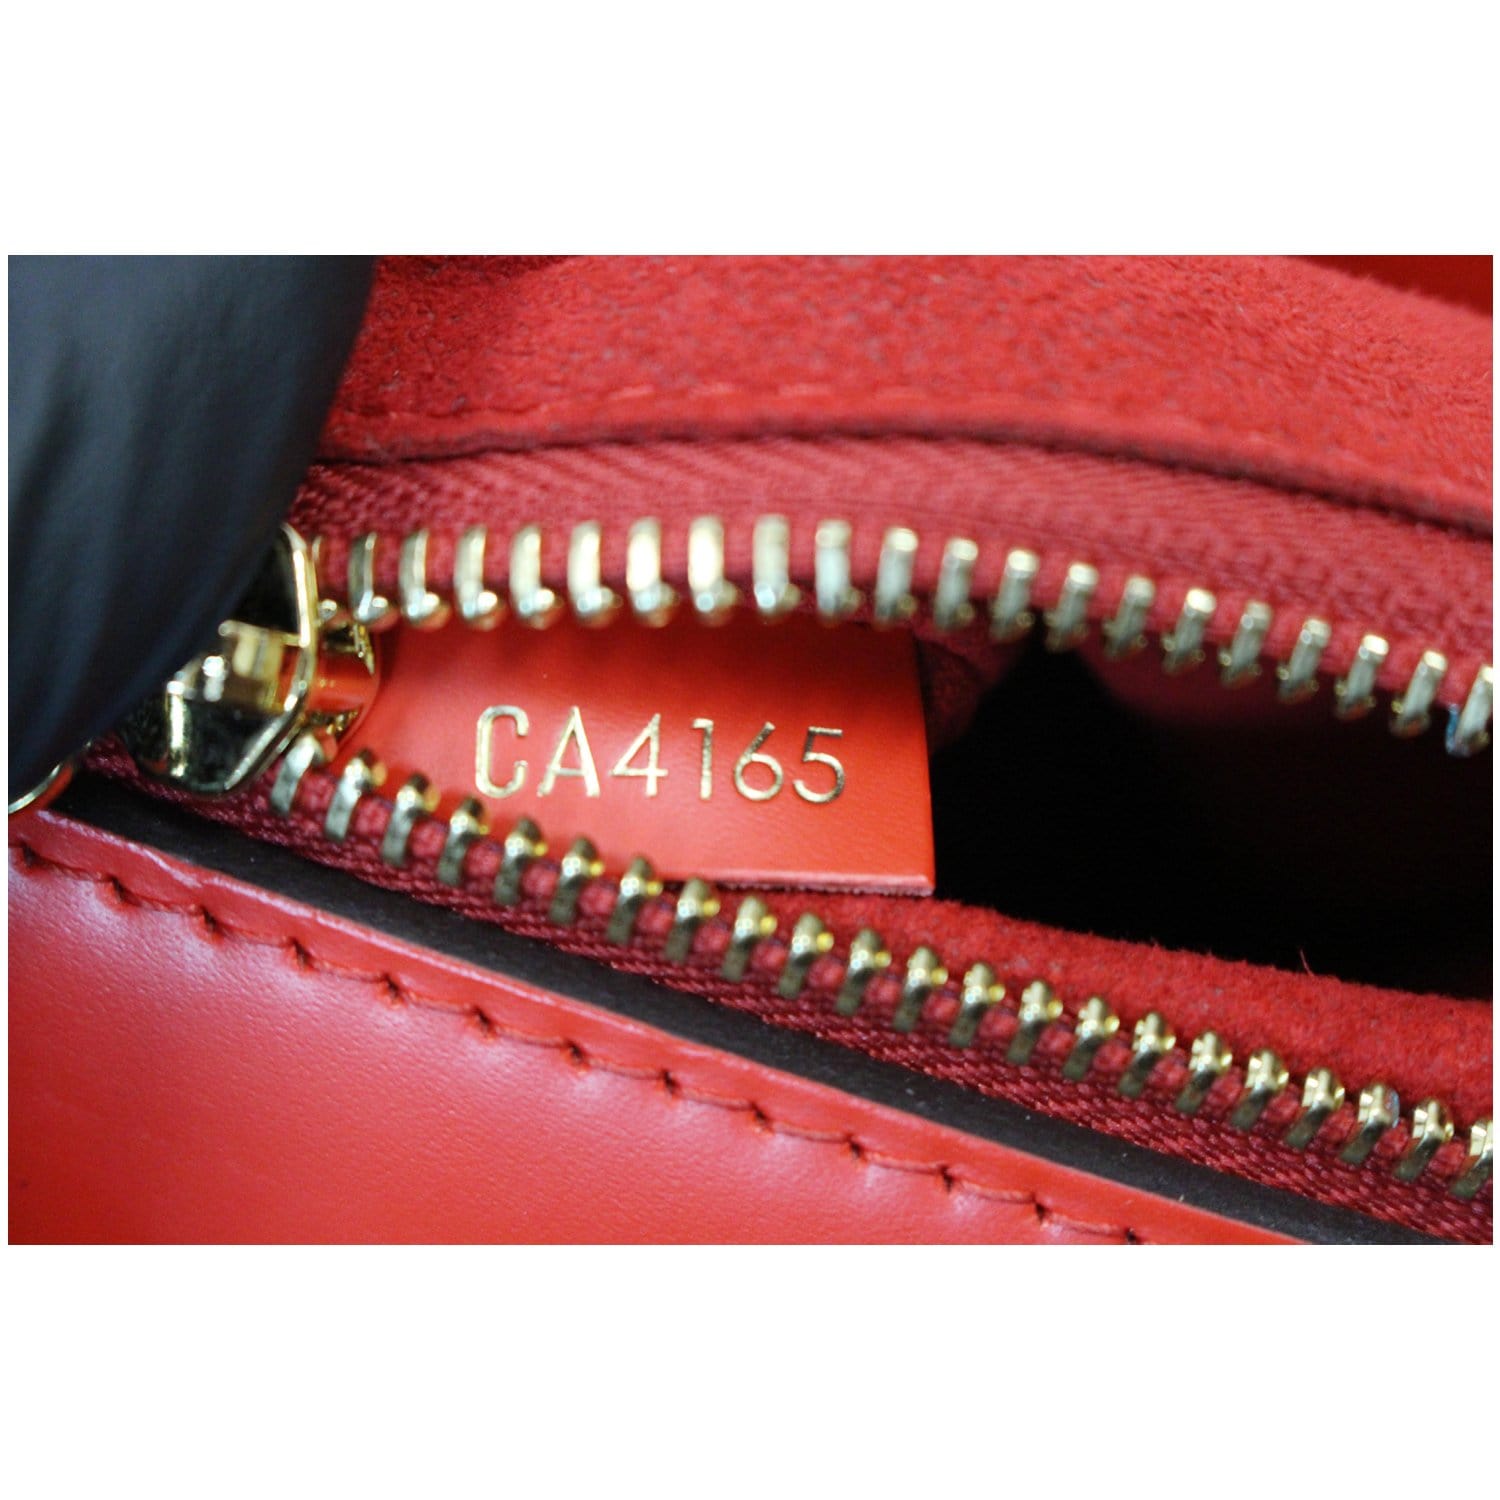 Louis Vuitton Brown Monogram Phenix PM Red Leather Cloth Pony